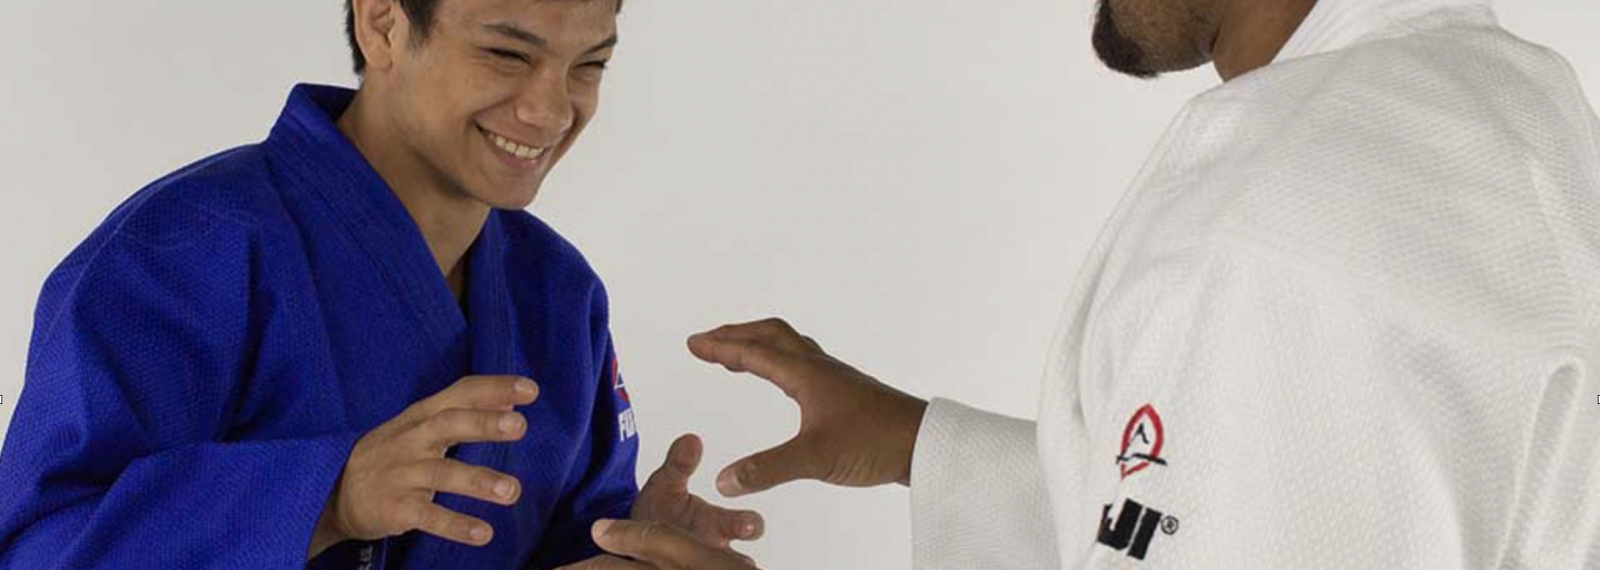 Fuji Tatami Mat: Worlds Best Judo Style Tatami Mats